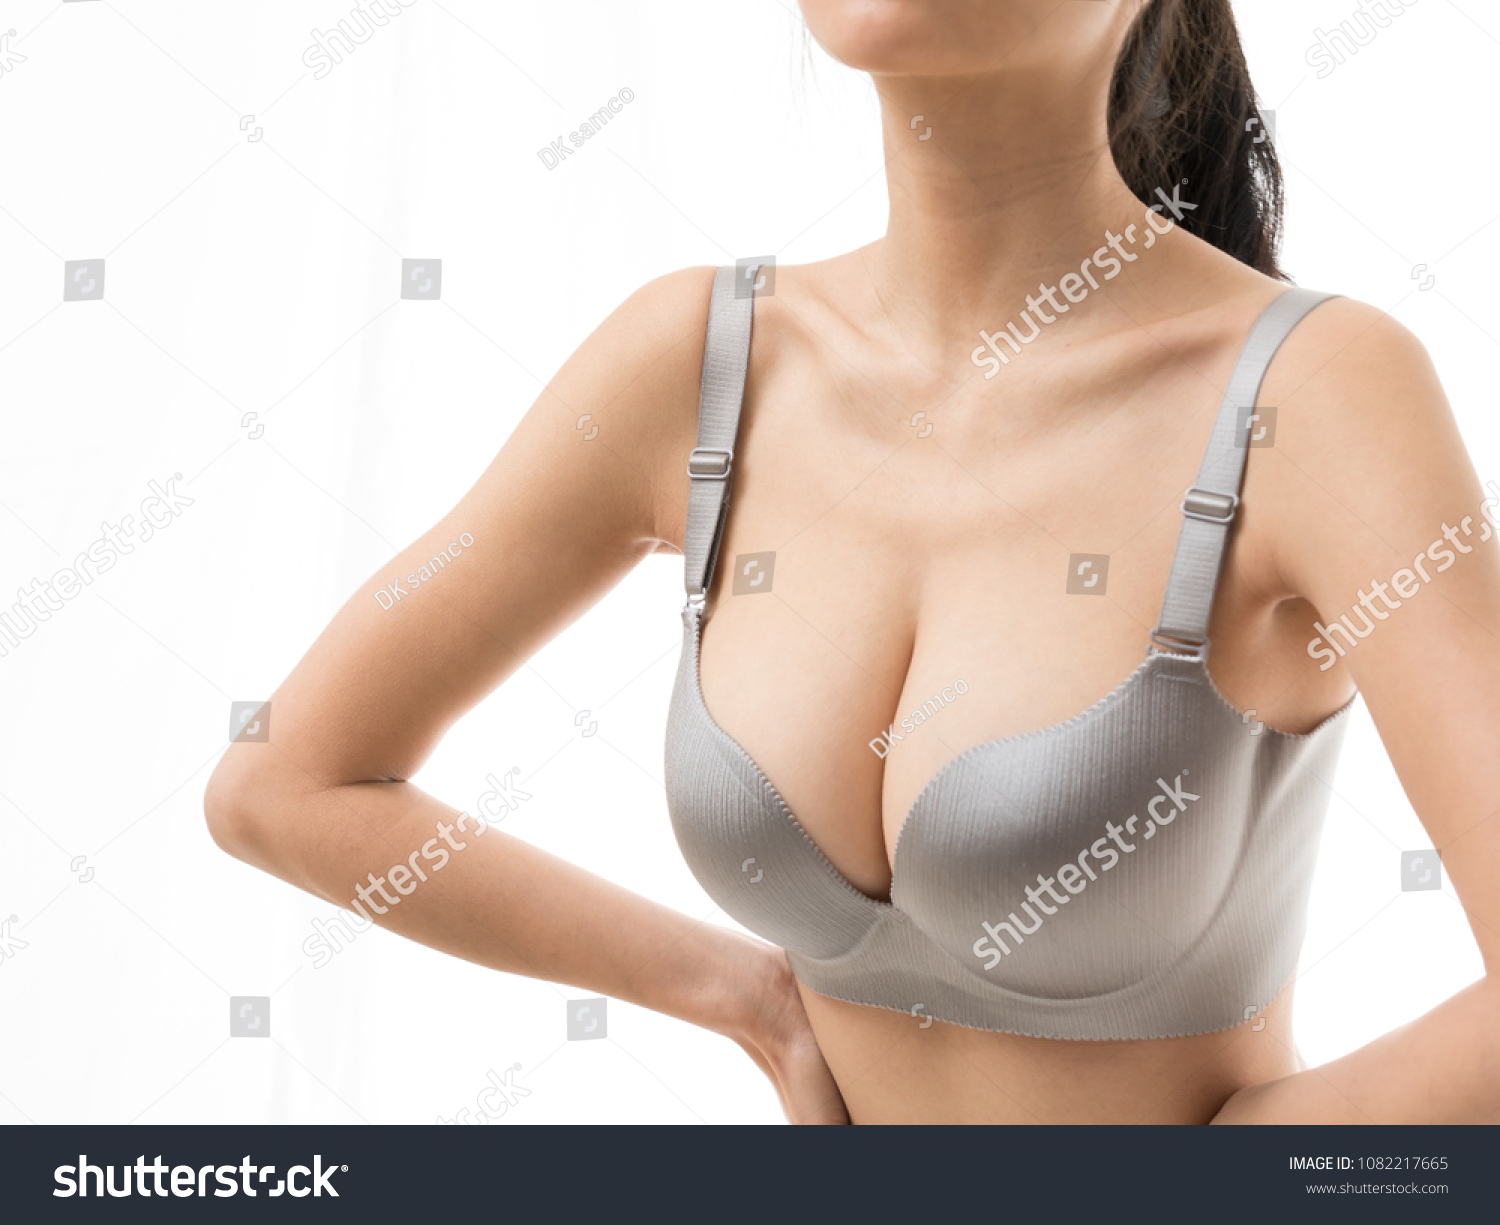 Woman Bra Big Boobs Body Part Stock Photo 1082217665 Shutterstock